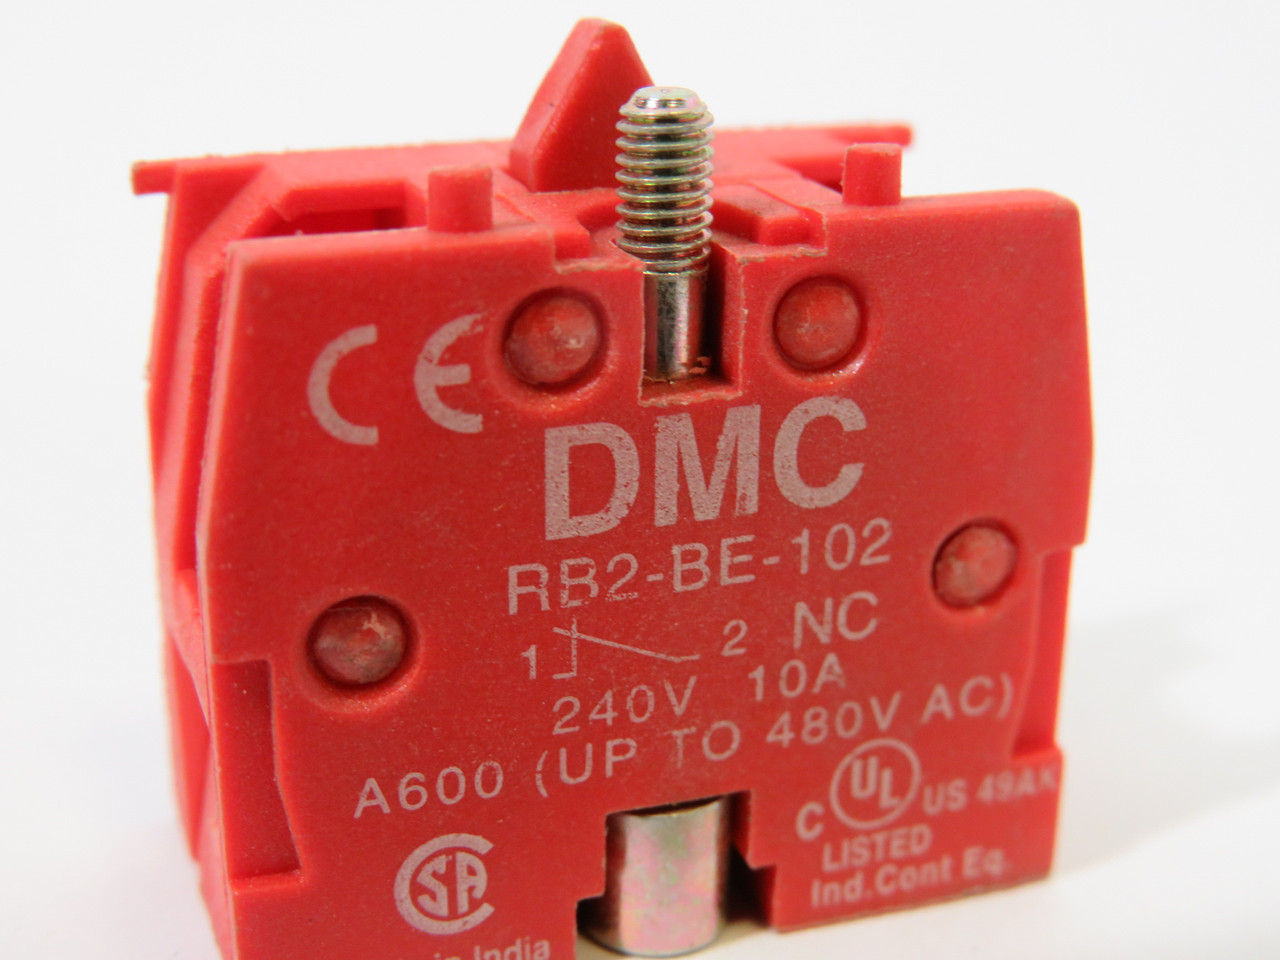 DMC RB2-BE-102 Contact Block 1NC 10A 240V 480VAC USED